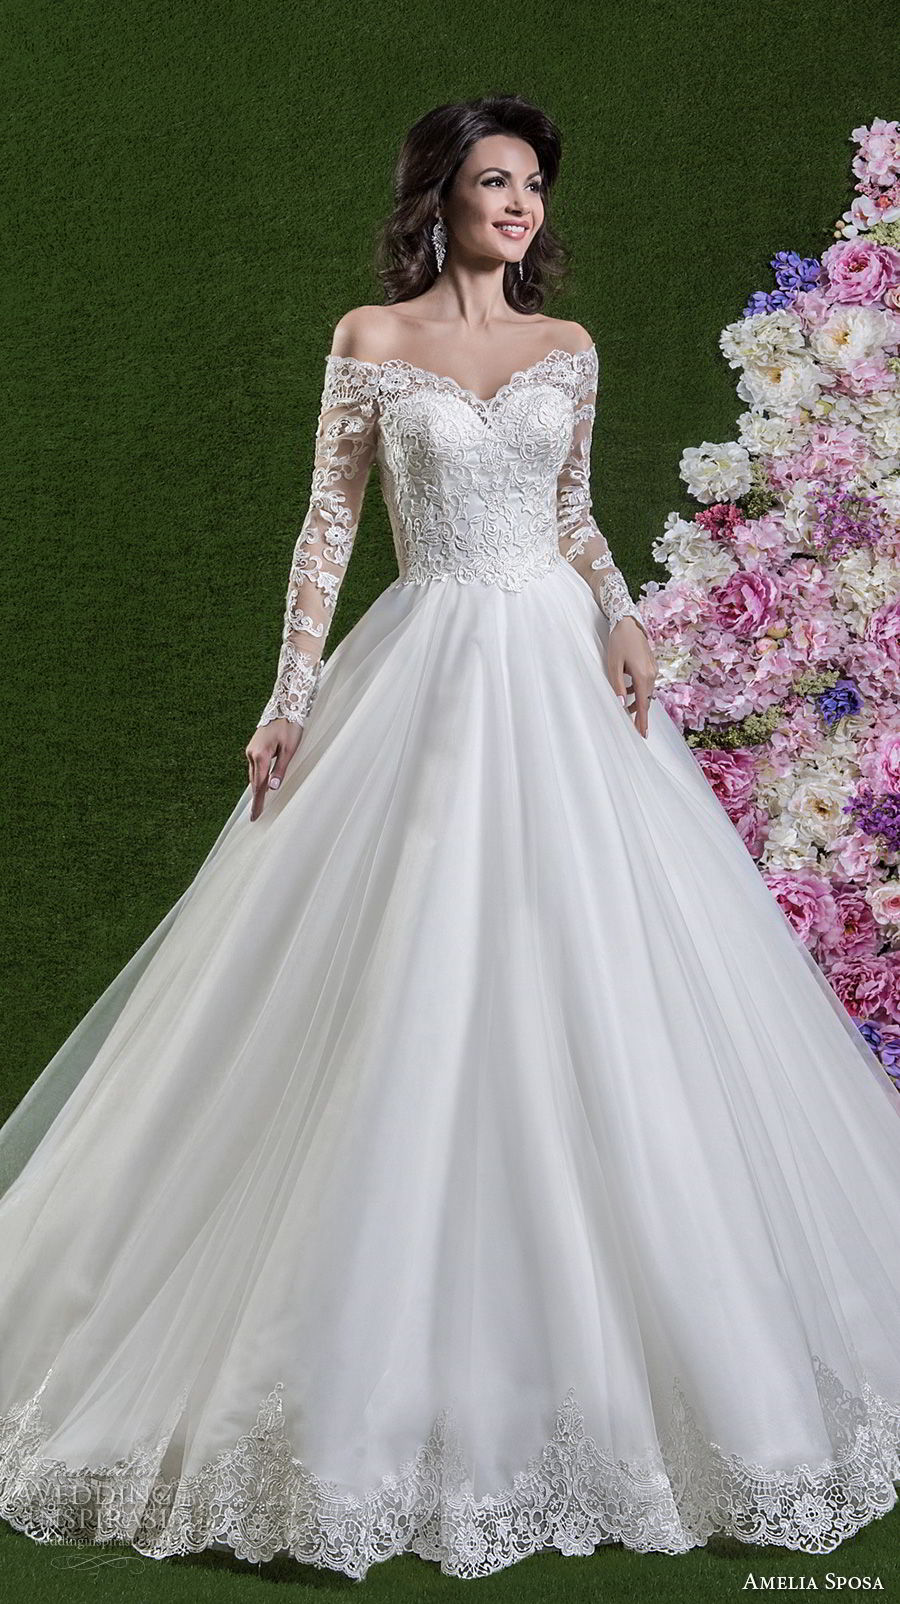 Amelia Sposa 2018 Wedding Dresses | Wedding Inspirasi